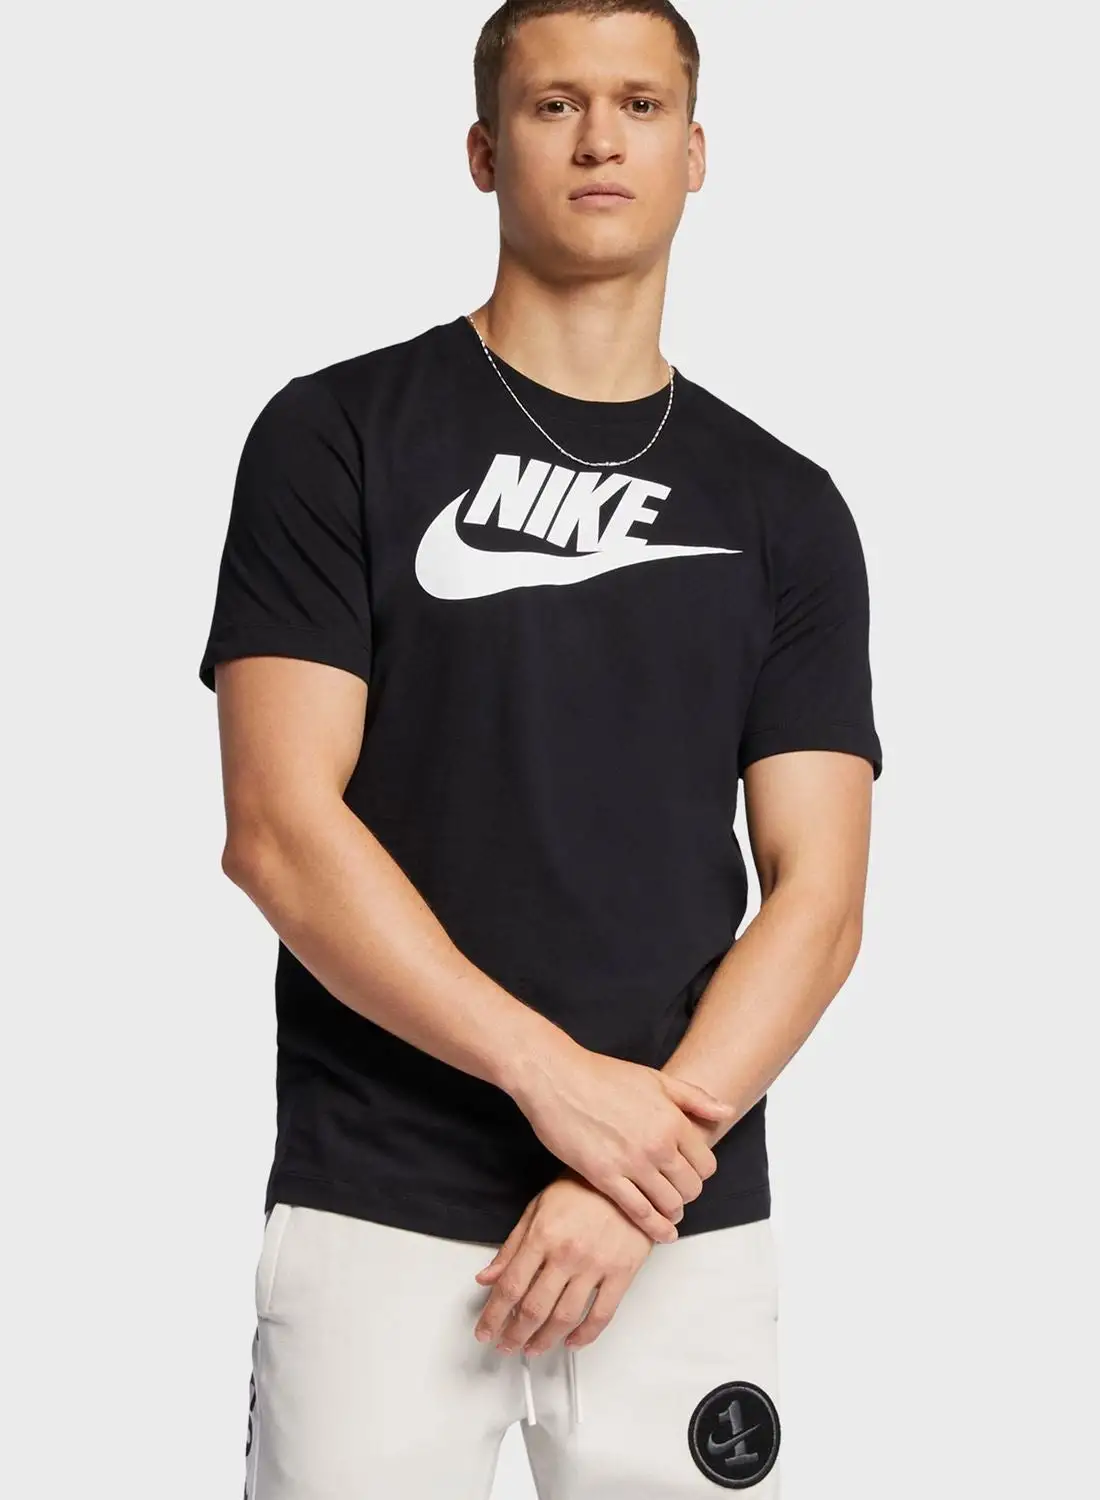 Nike Futura Icon T-Shirt